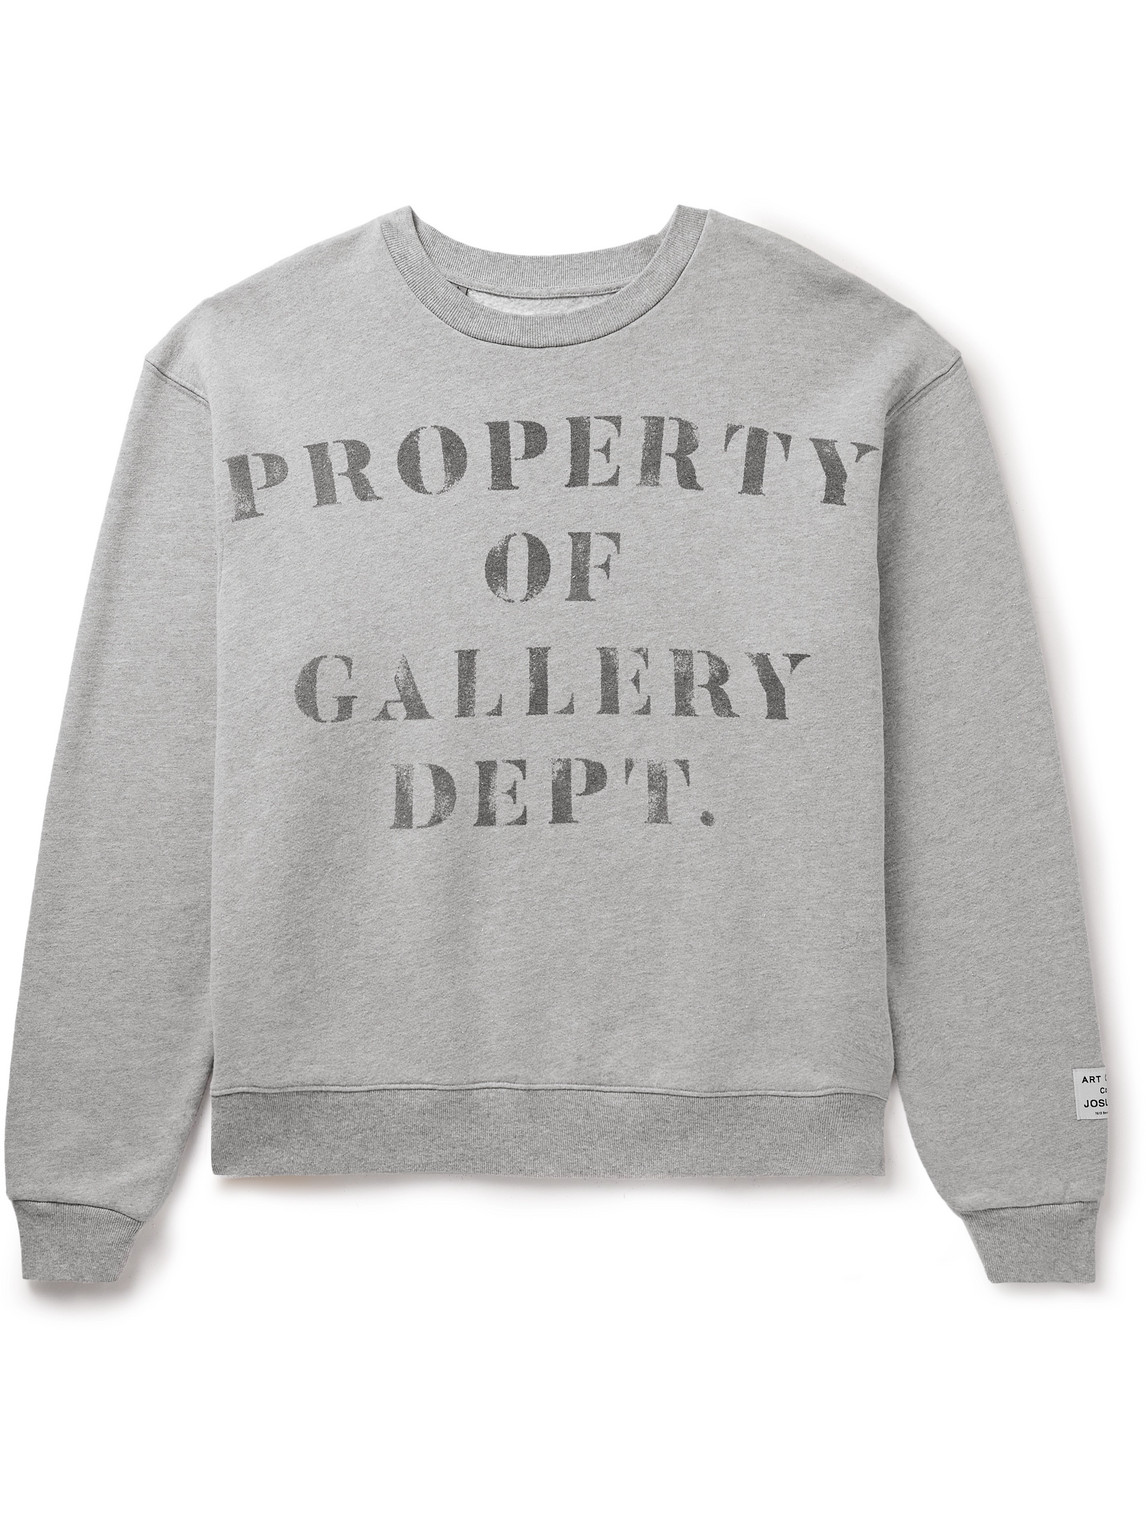 Gallery Dept. Printed Cotton-jersey Sweatshirt In Grey